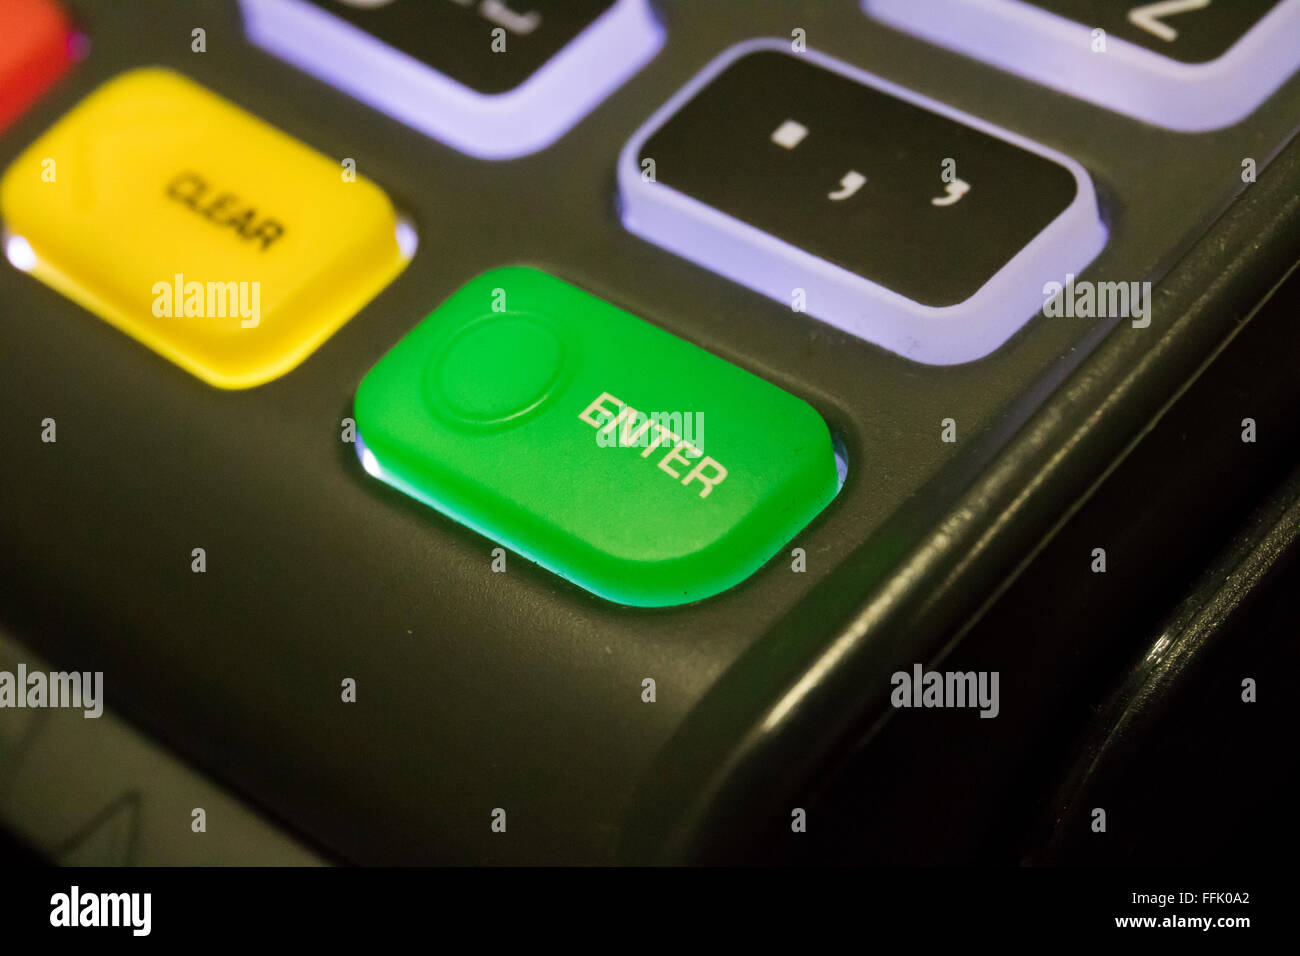 keypad equipment green button ENTER Stock Photo